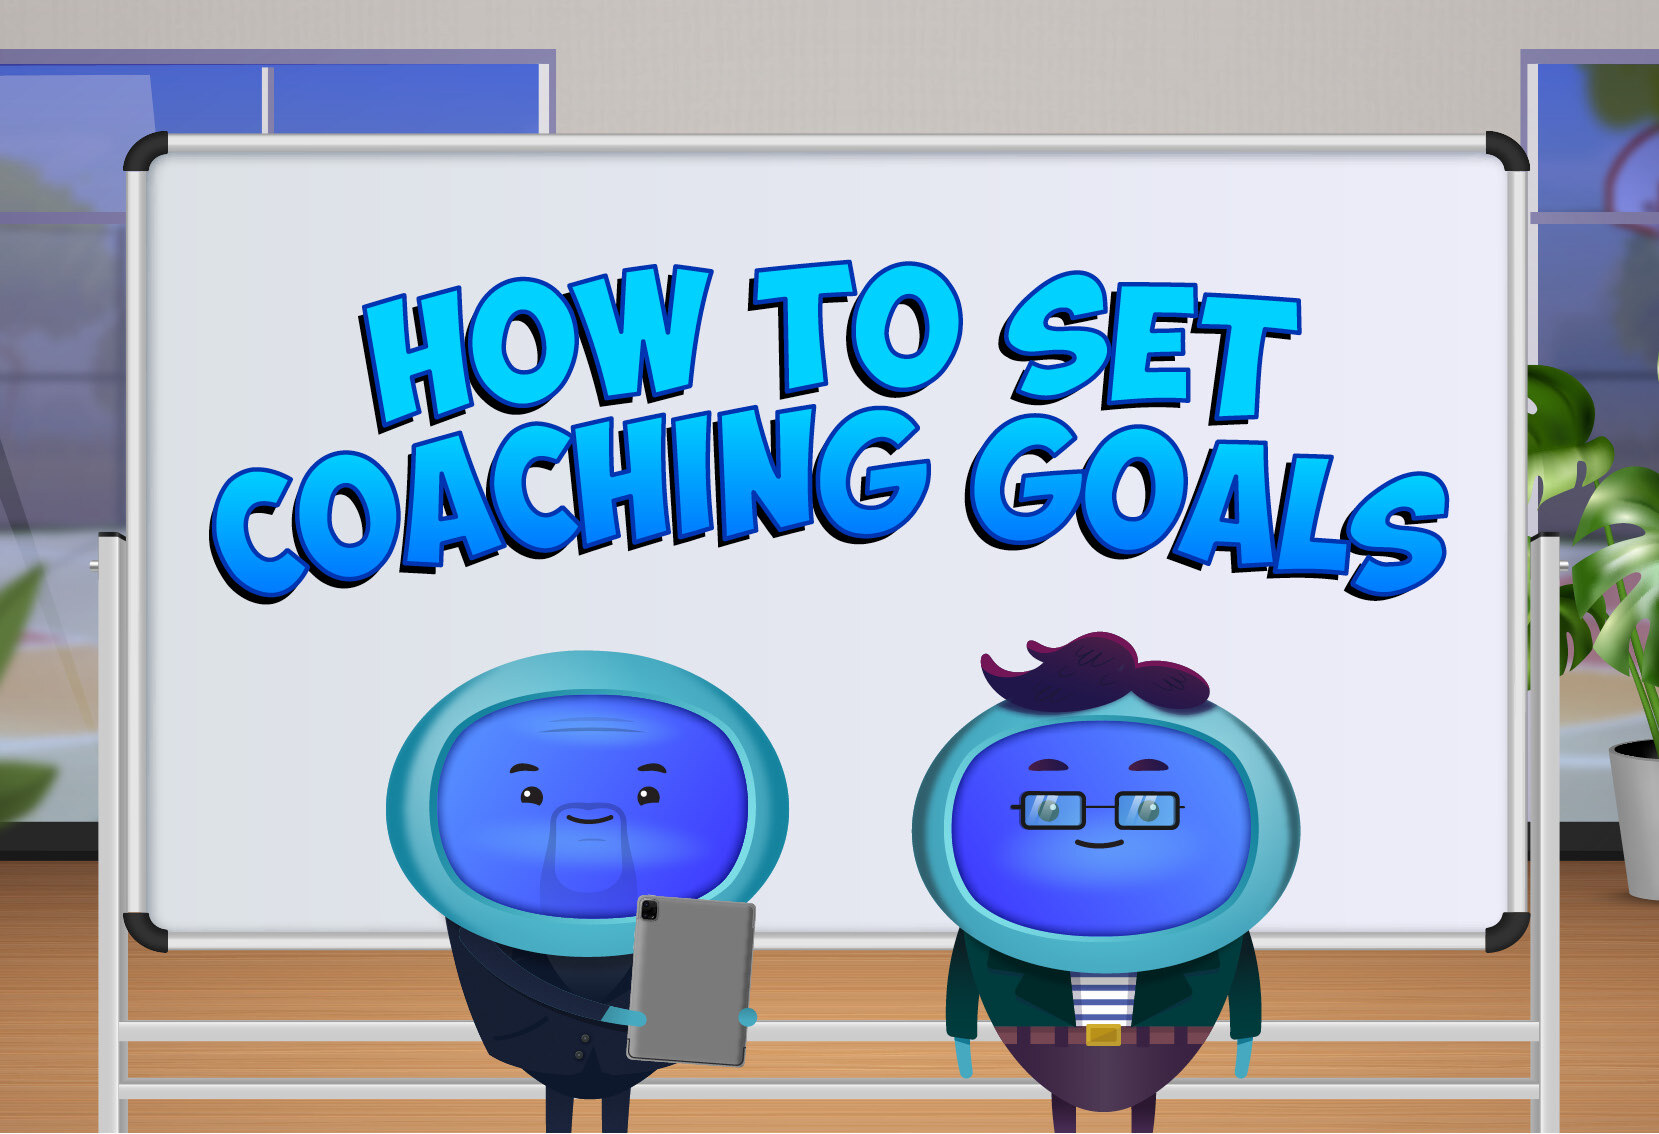 iAM 00346 - How to Set Coaching Goals - LMS Thumbnail